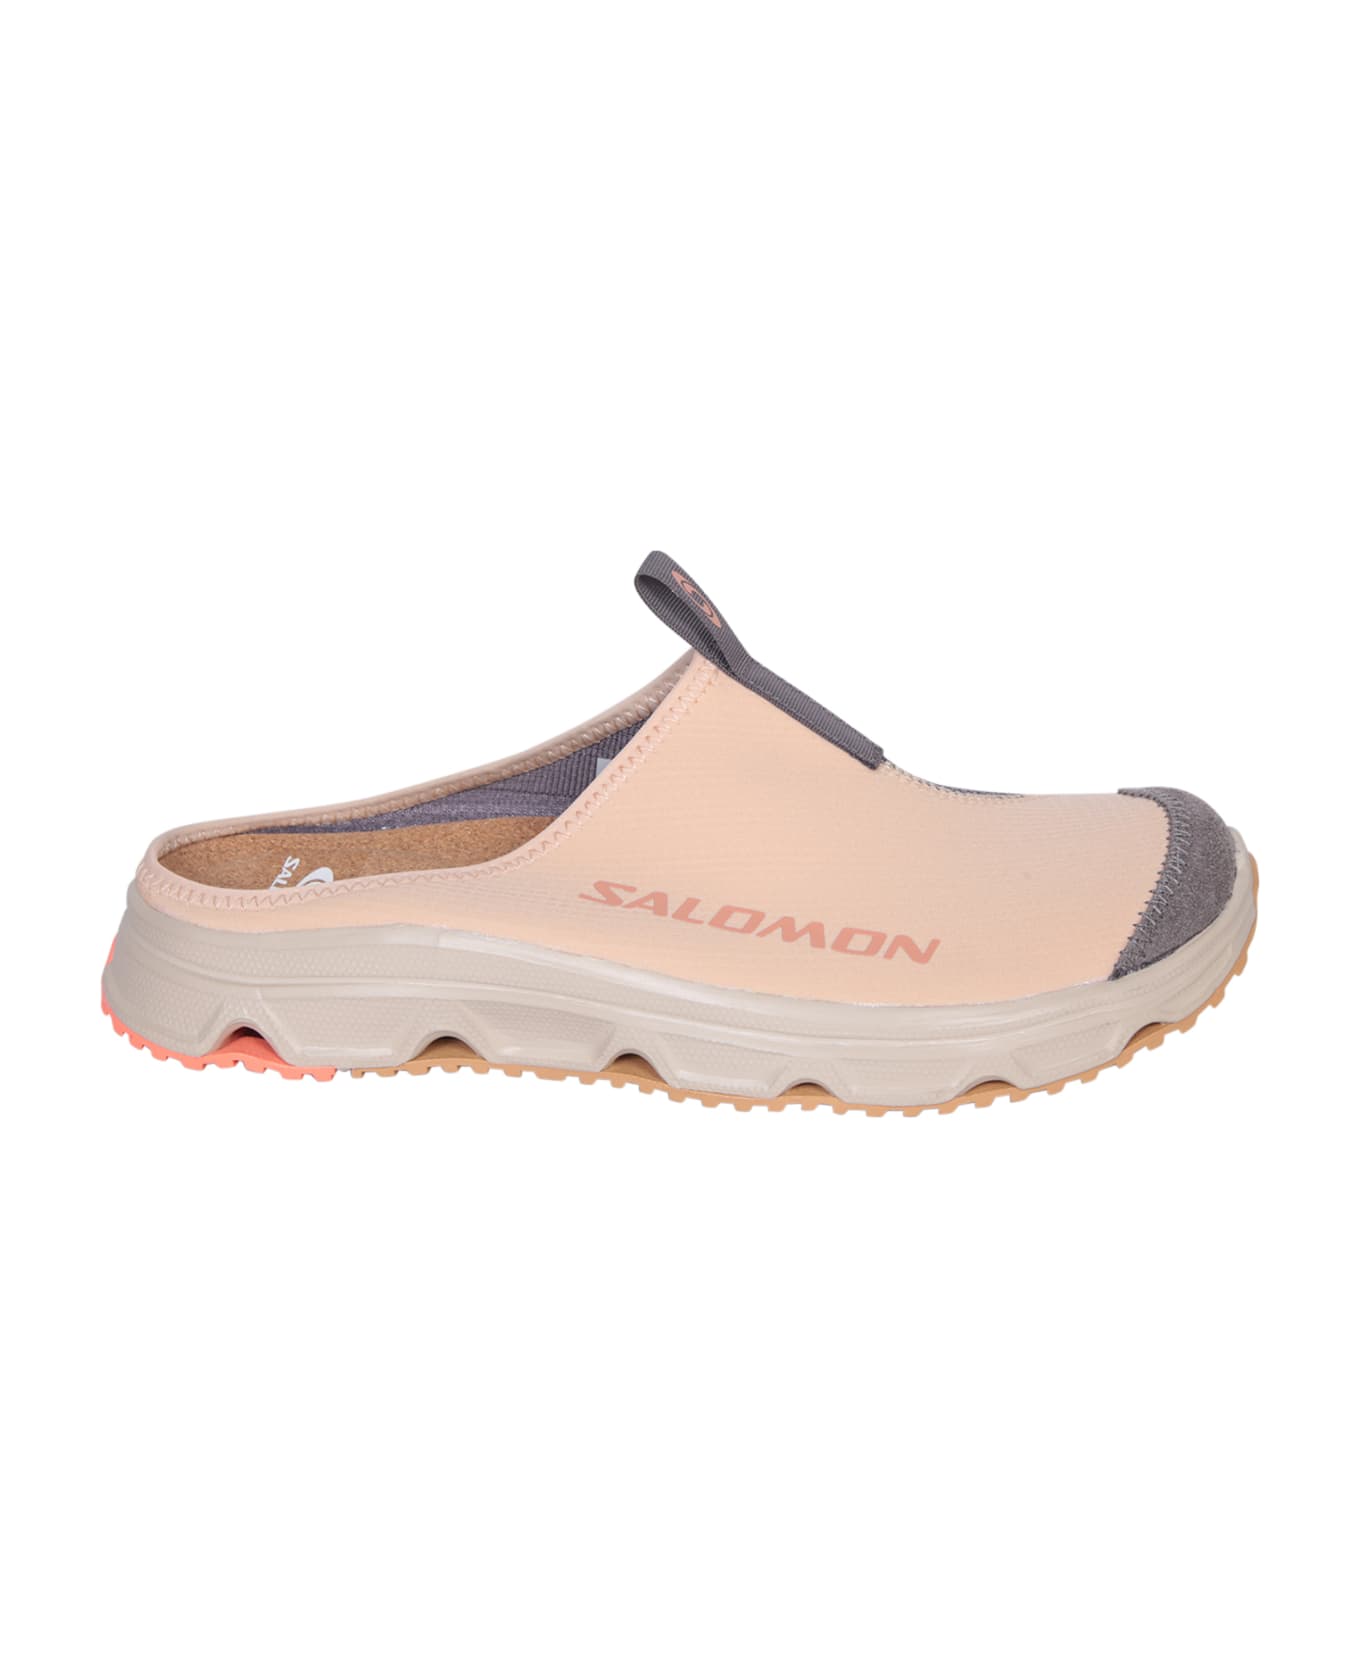 Salomon Rx Slide 3.0 Sneakers In Pink - Pink その他各種シューズ